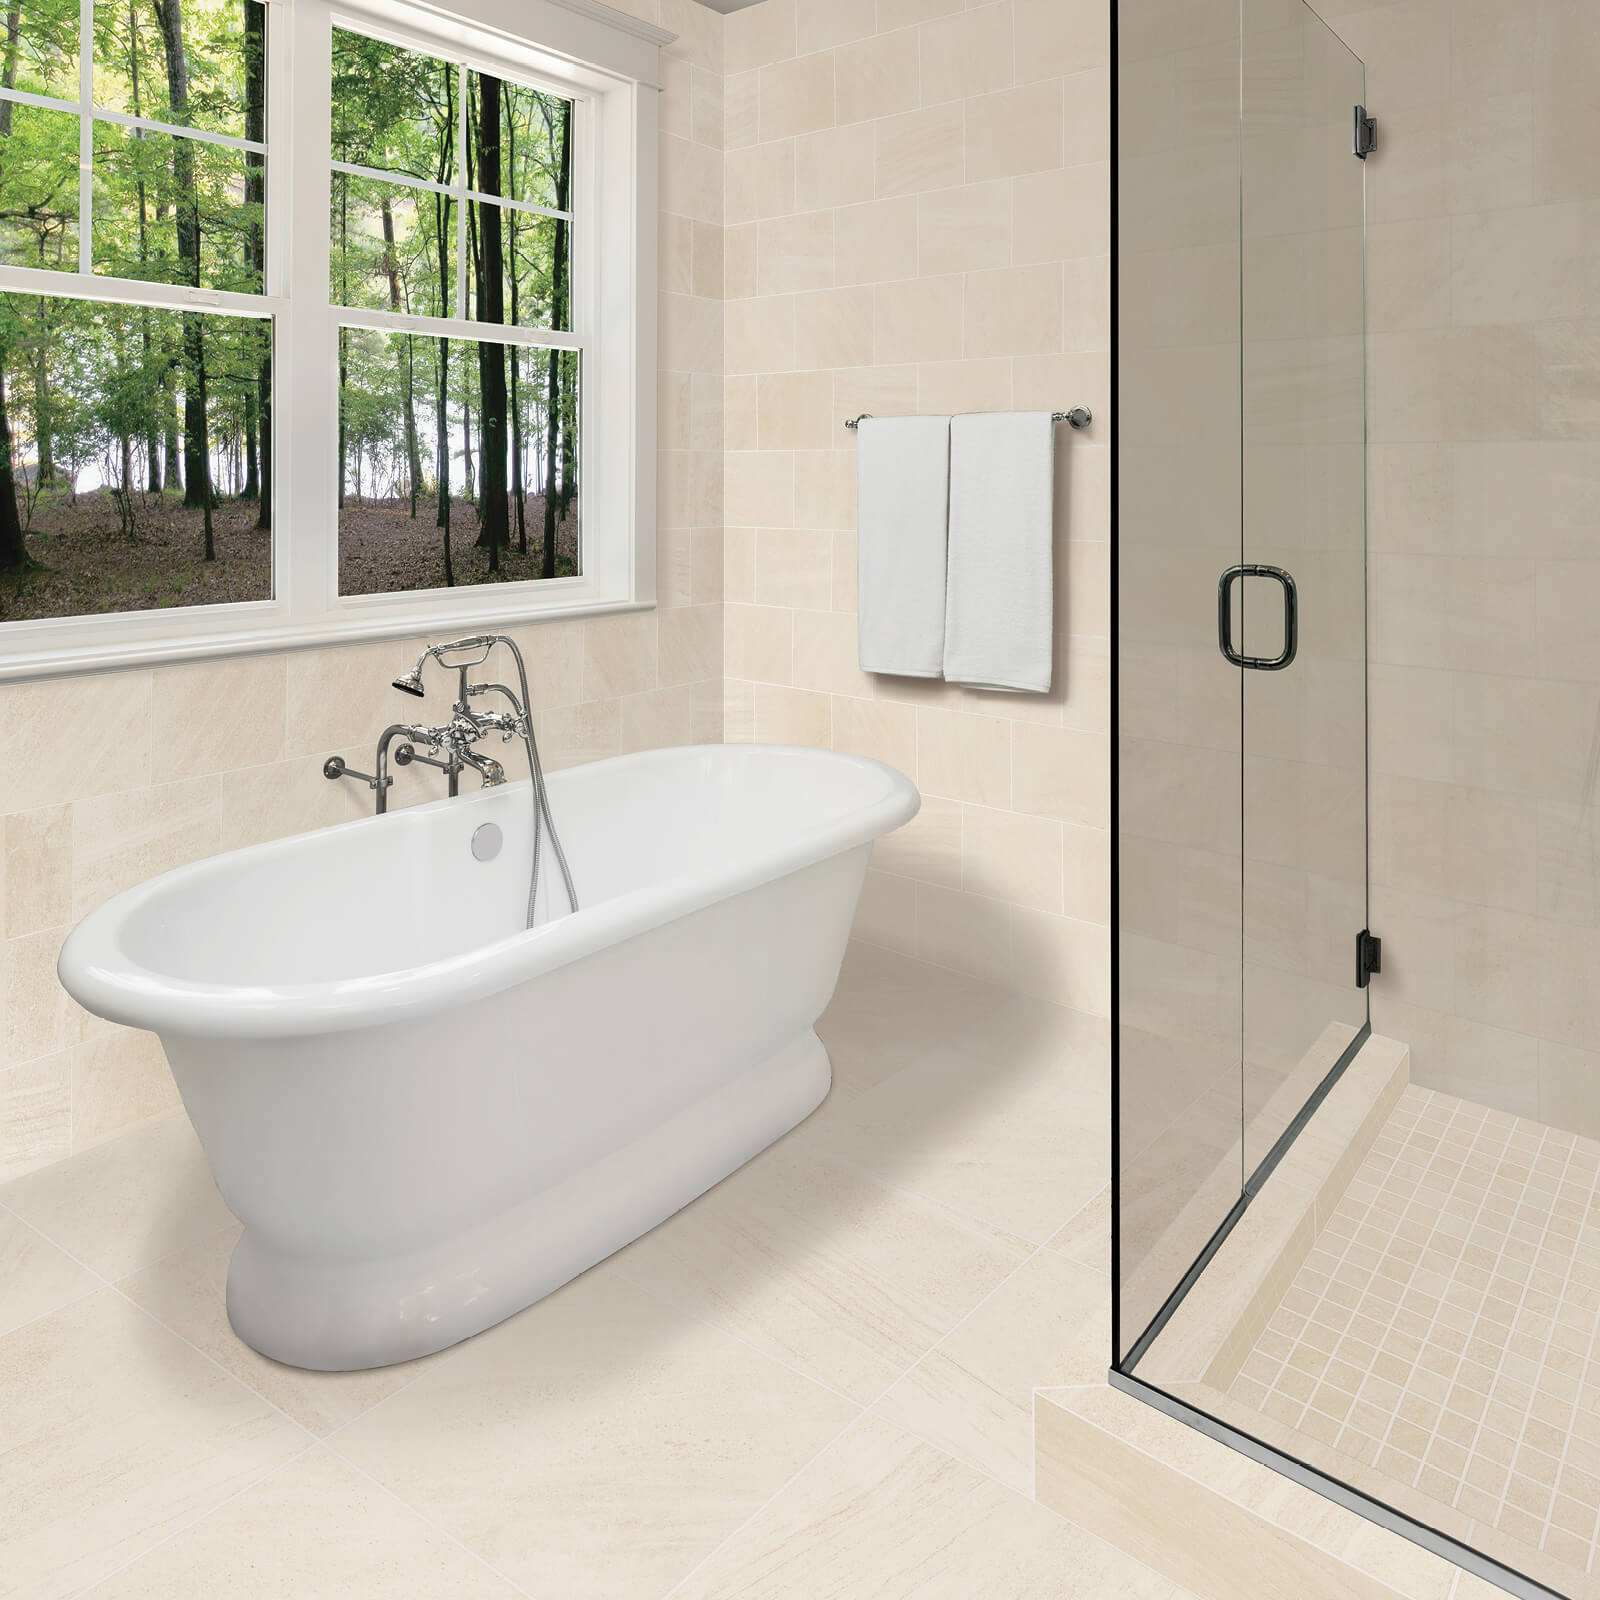 Shower room tiles | Carpetland USA of VA